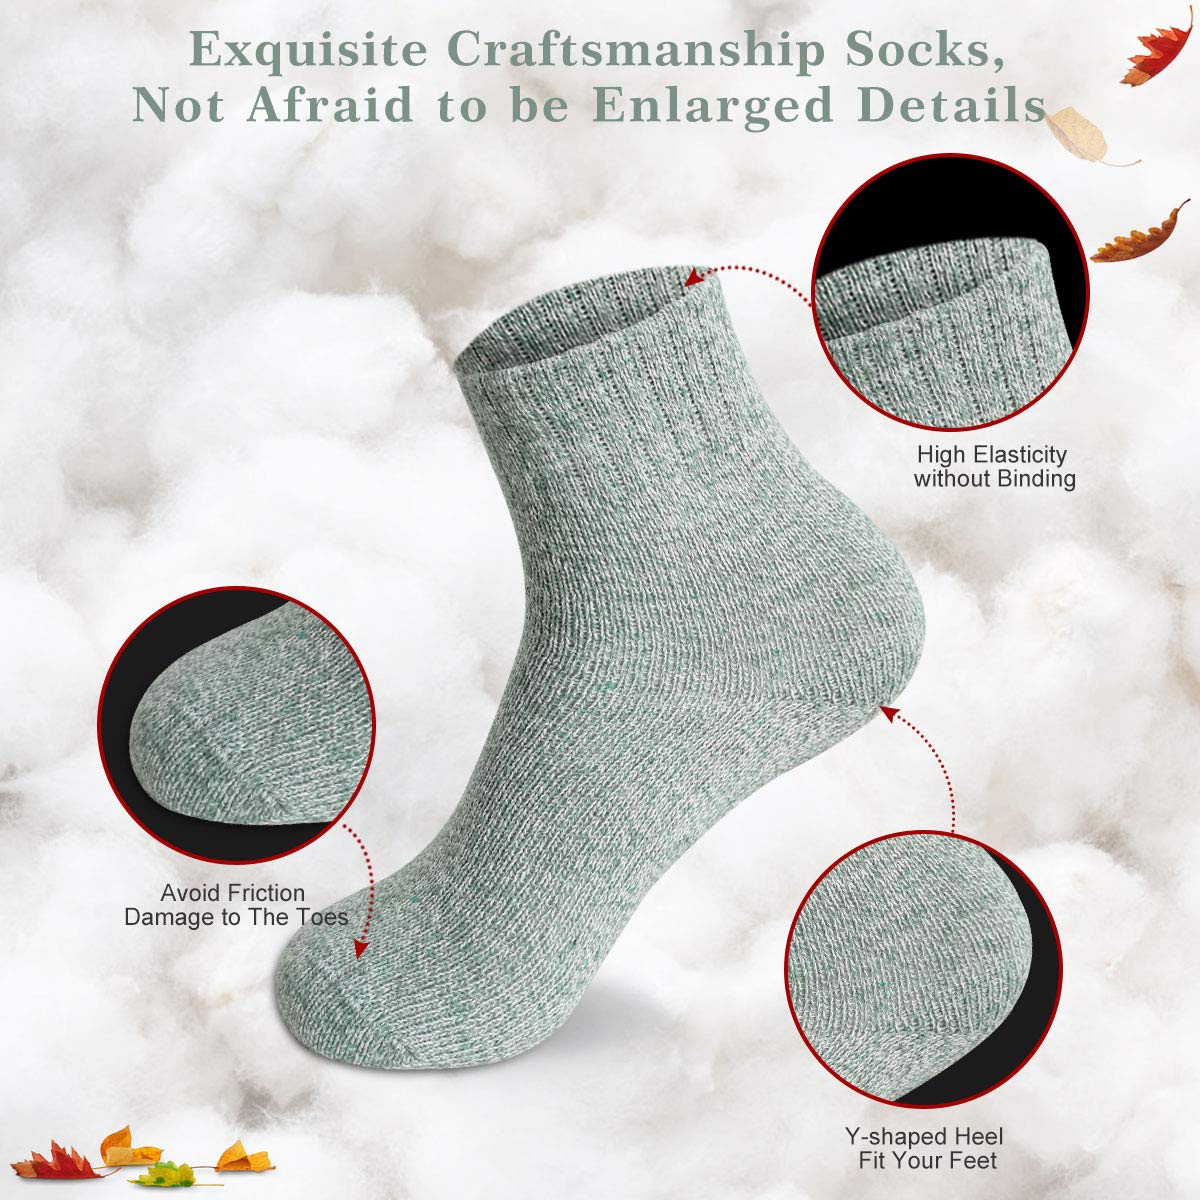 FYC Women Socks Winter - Gifts for Women - Warm Thick Soft Wool Socks Christmas Gifts Socks Cozy Crew Socks